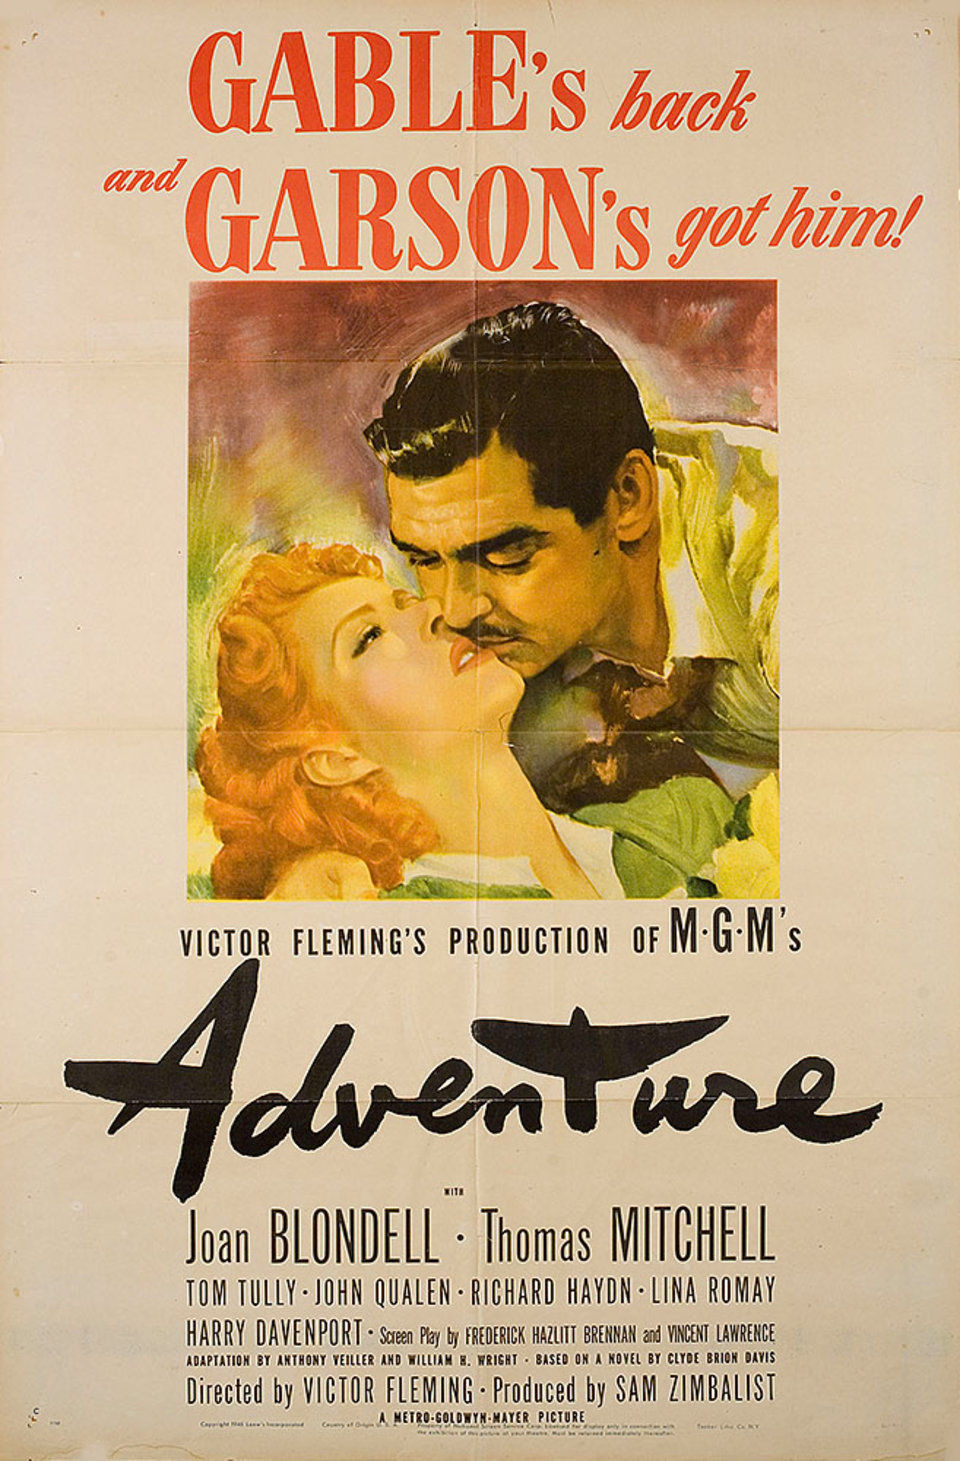 ADVENTURE (1945)